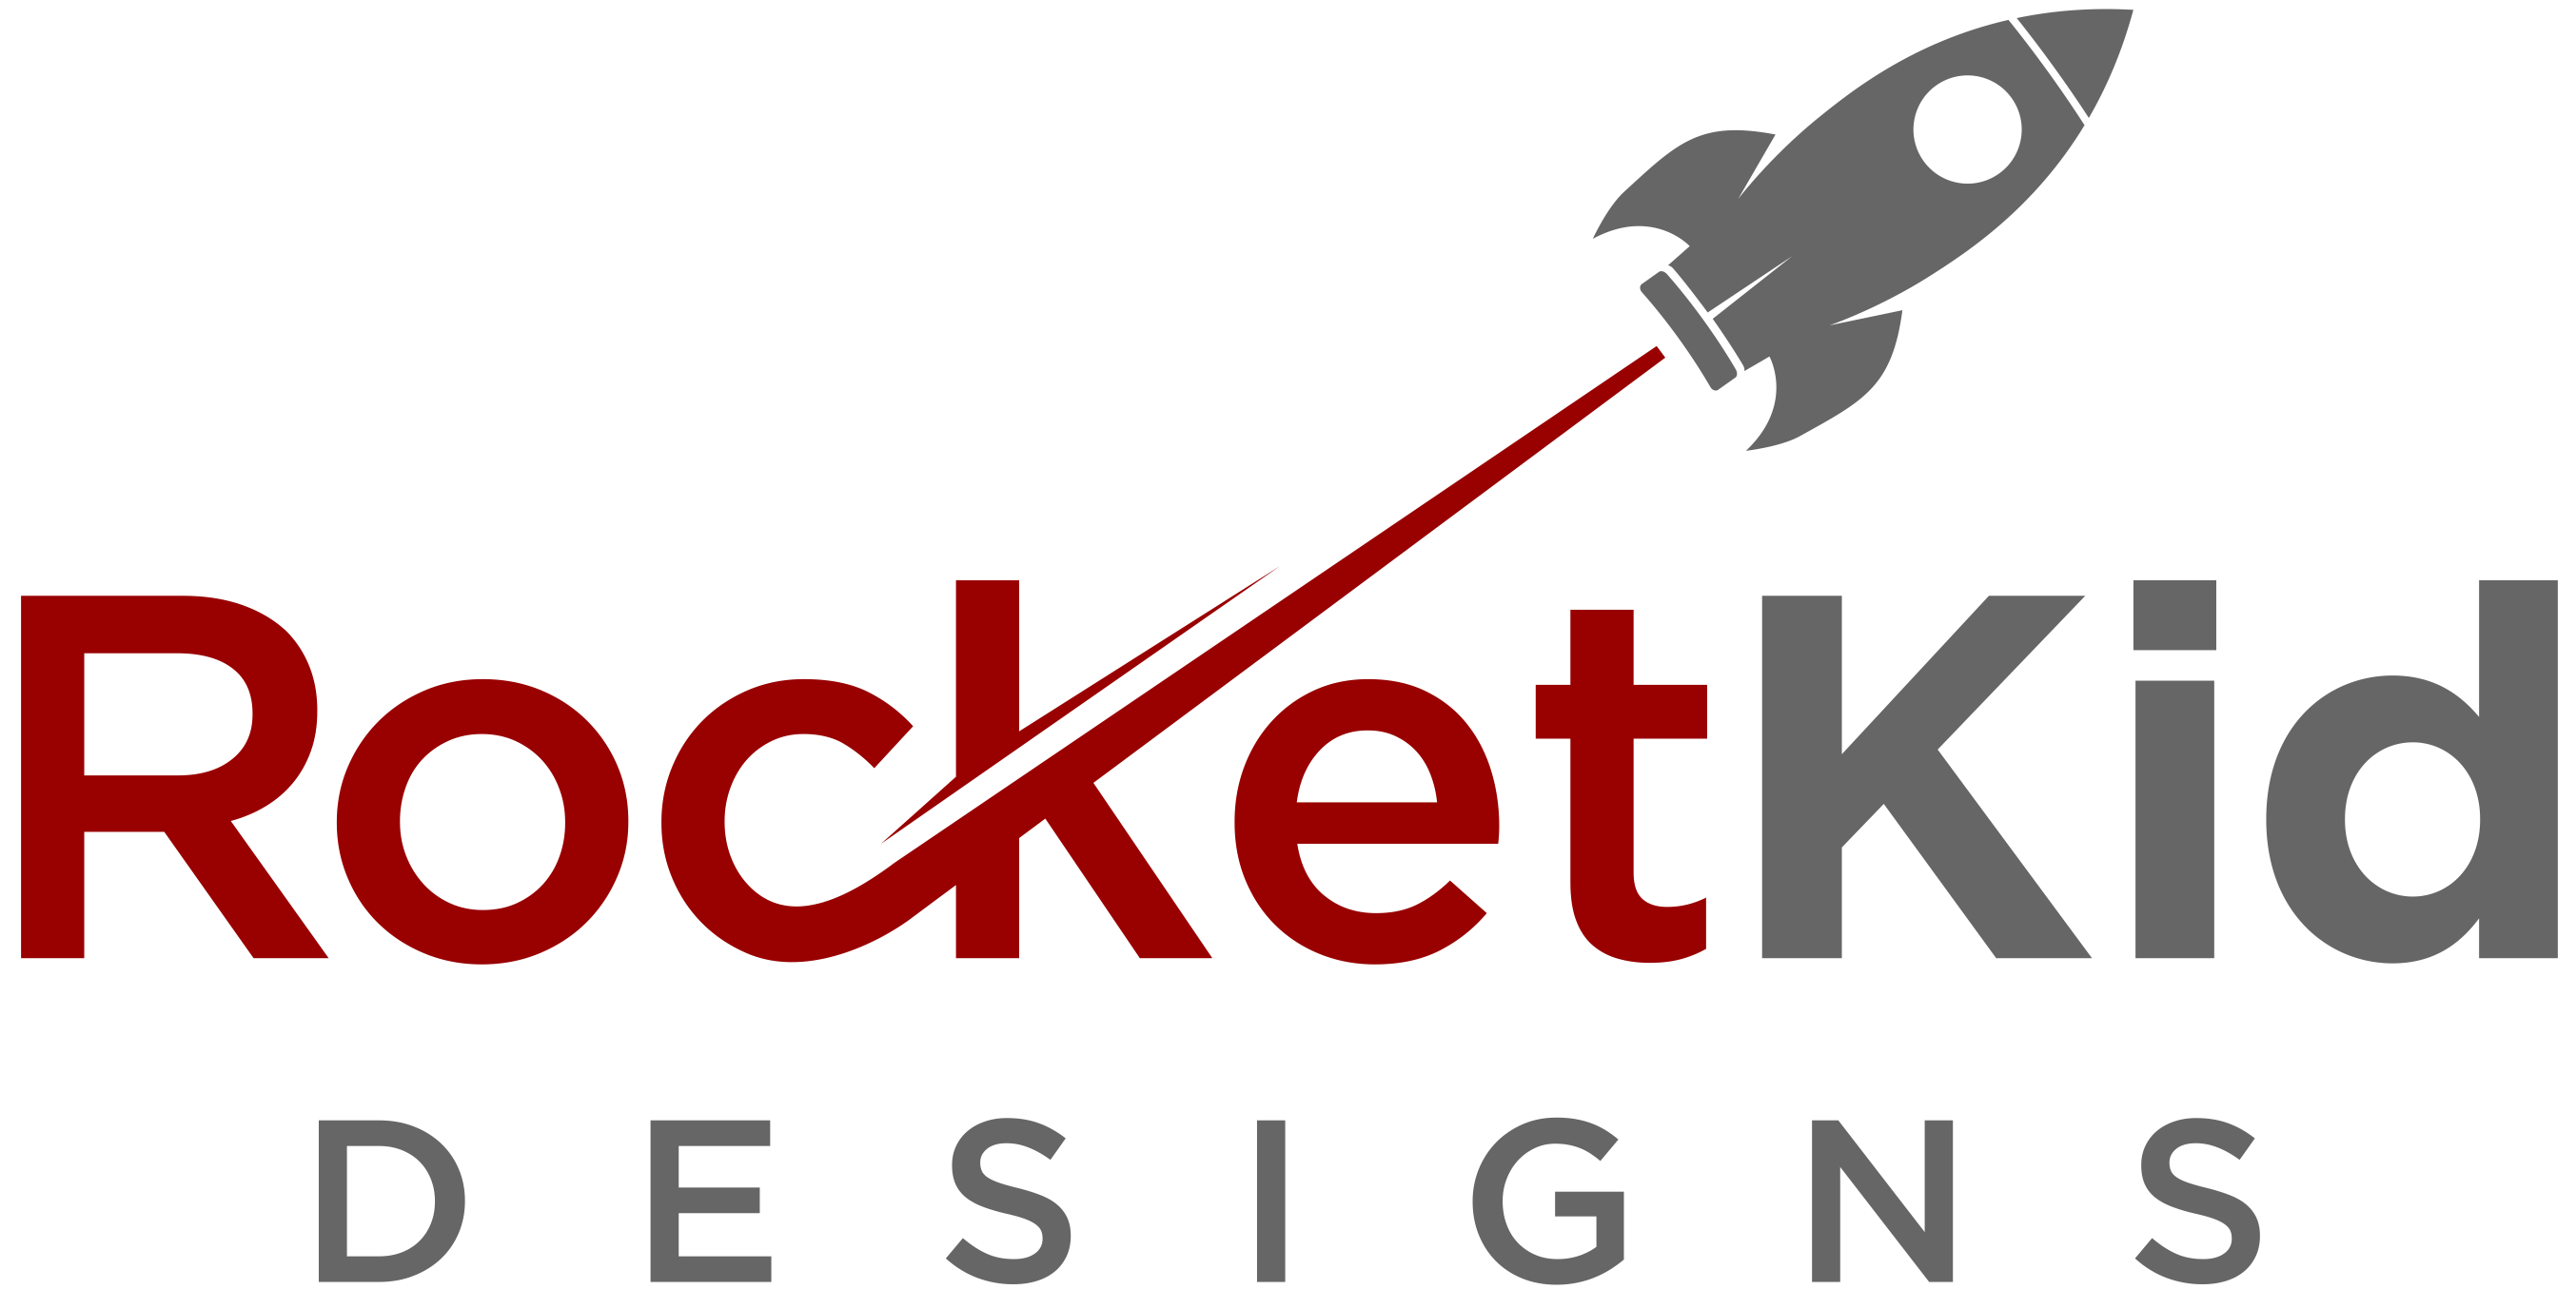 RocketKid Designs